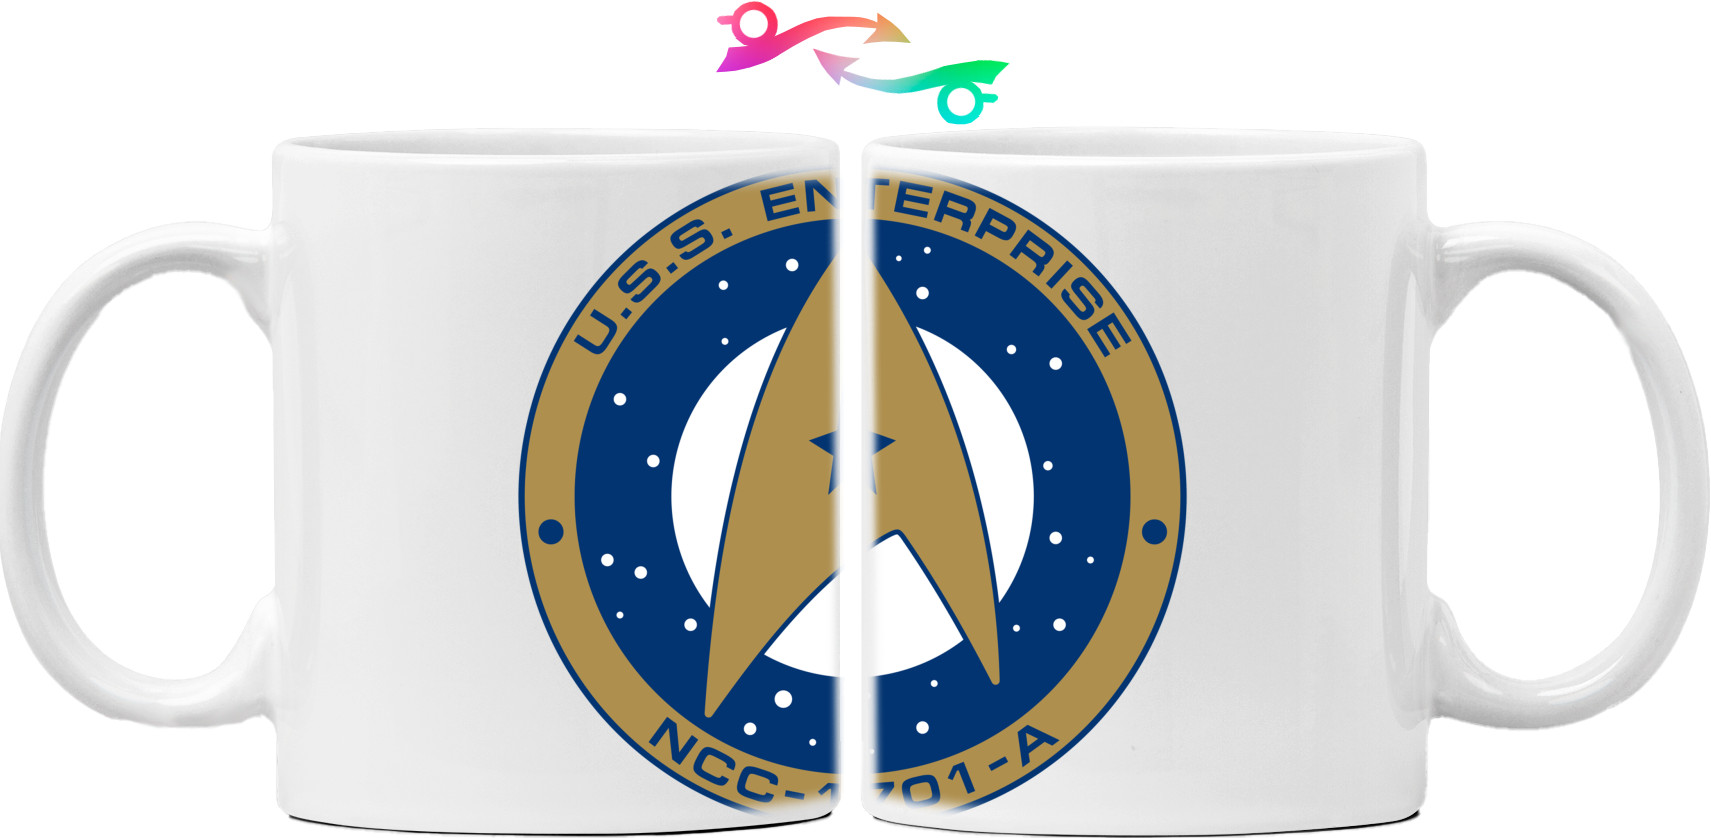 Star Trek USS Enterpise NCC-1701 Badge